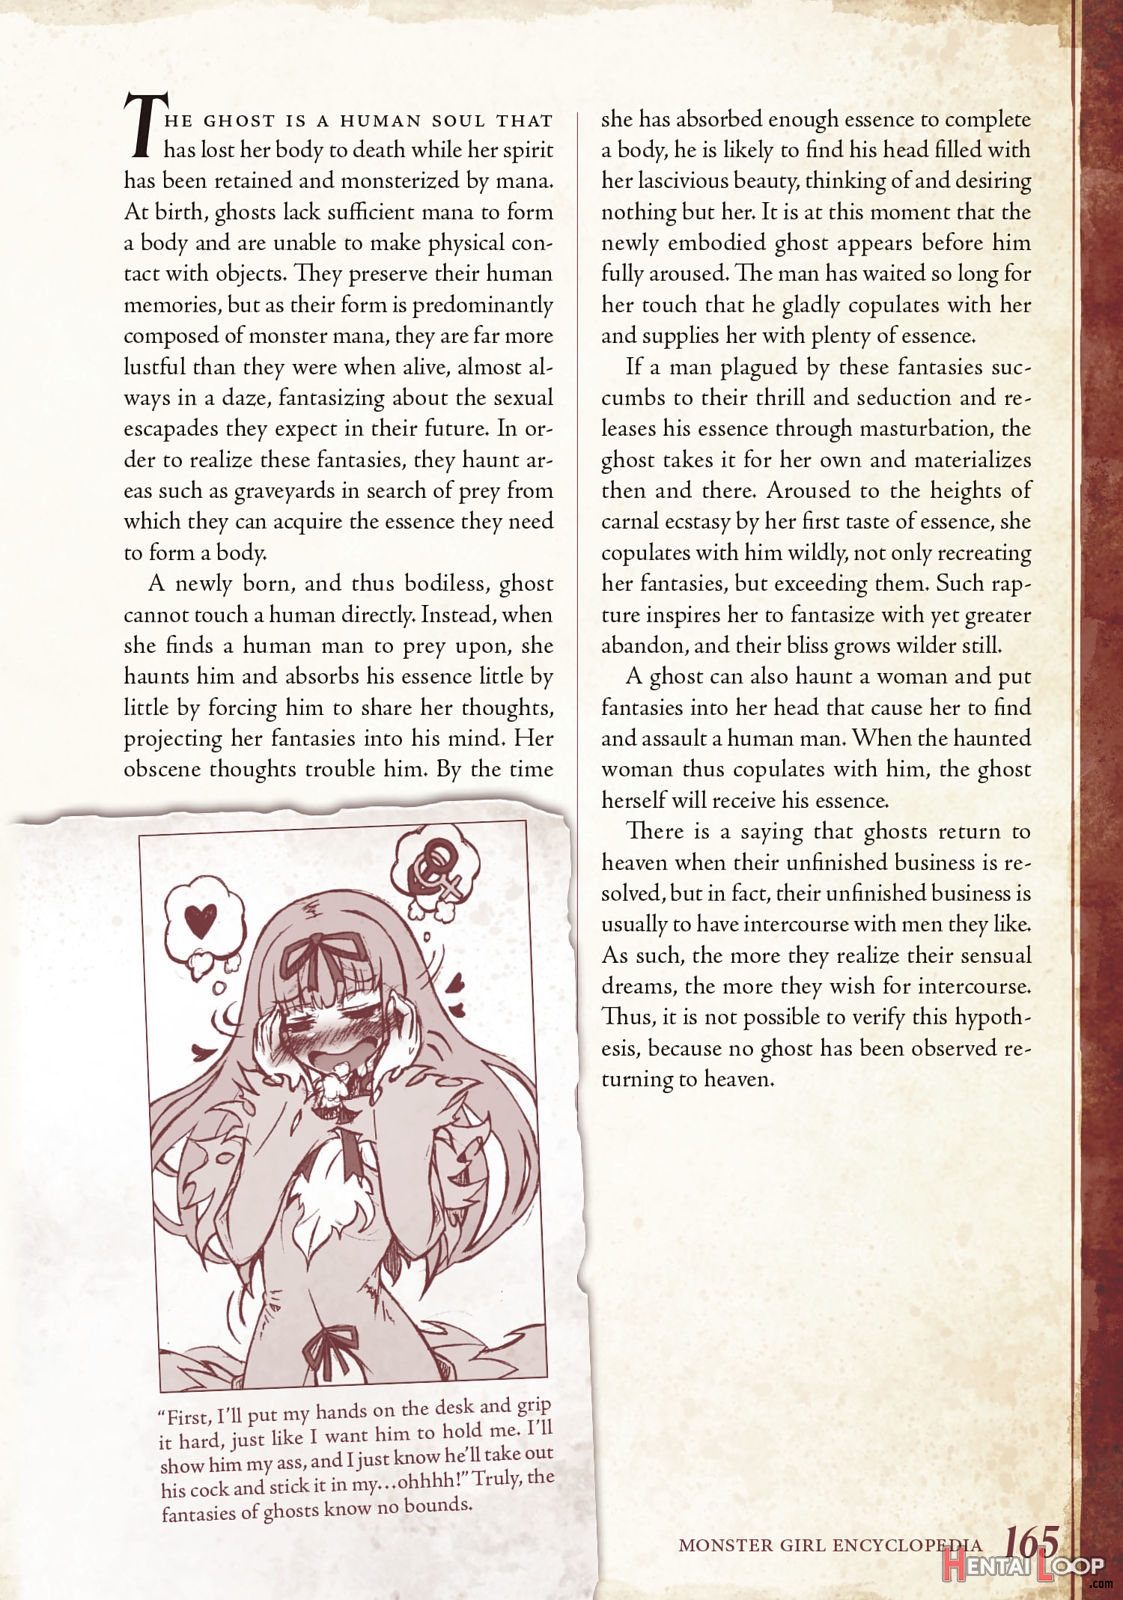 Monster Girl Encyclopedia Vol. 1 page 166